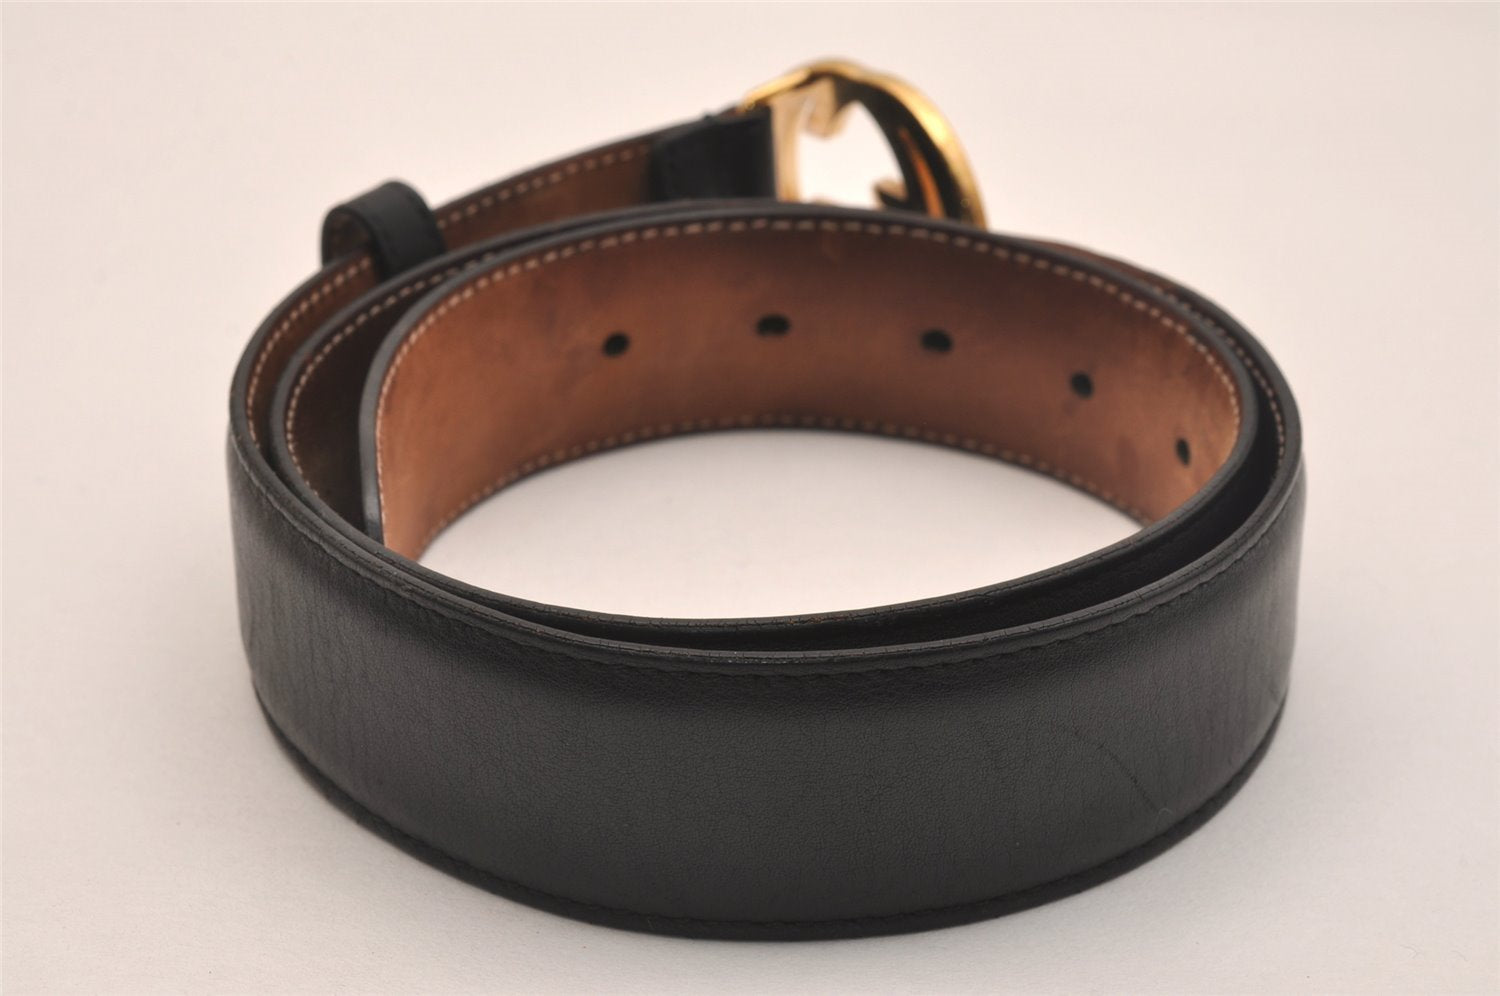 Authentic GUCCI Interlocking G Belt Leather Size 80cm 31.5